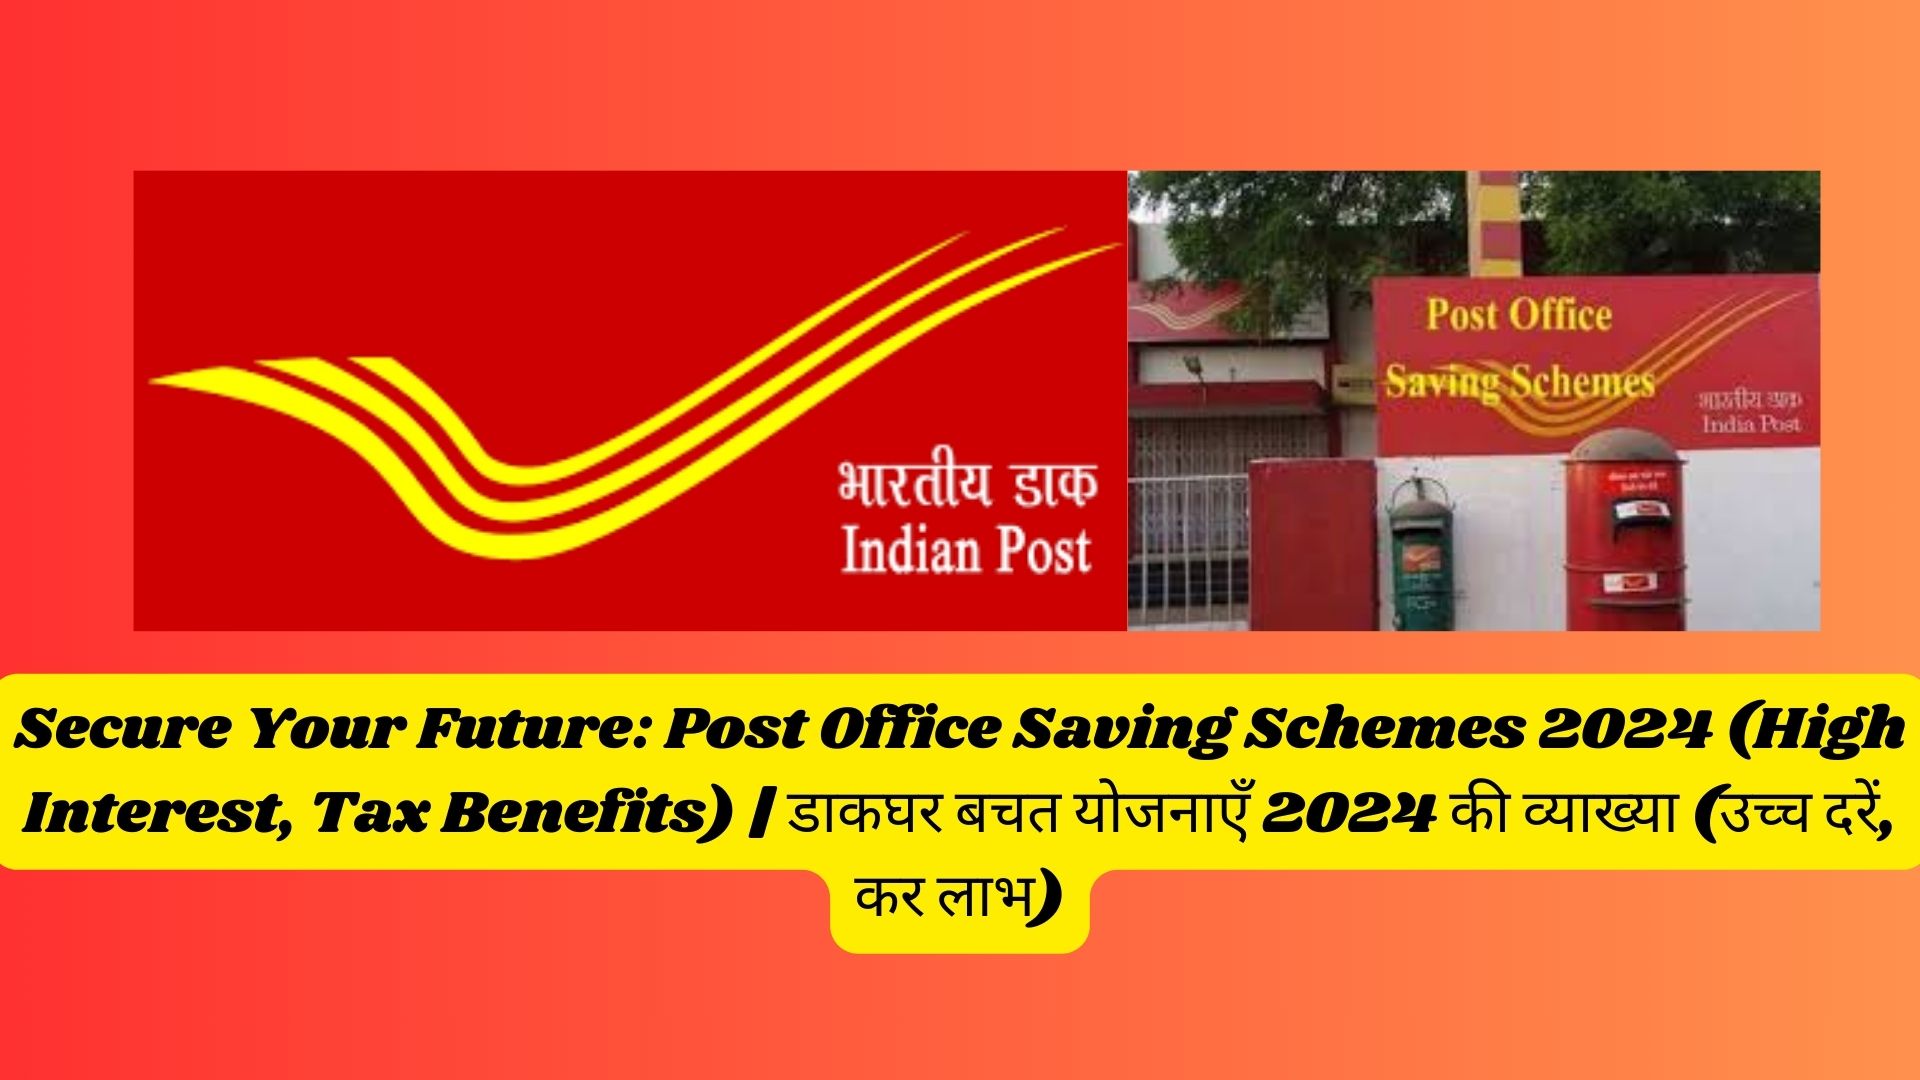 Secure Your Future: Post Office Saving Schemes 2024 (High Interest, Tax Benefits) | डाकघर बचत योजनाएँ 2024 की व्याख्या (उच्च दरें, कर लाभ)